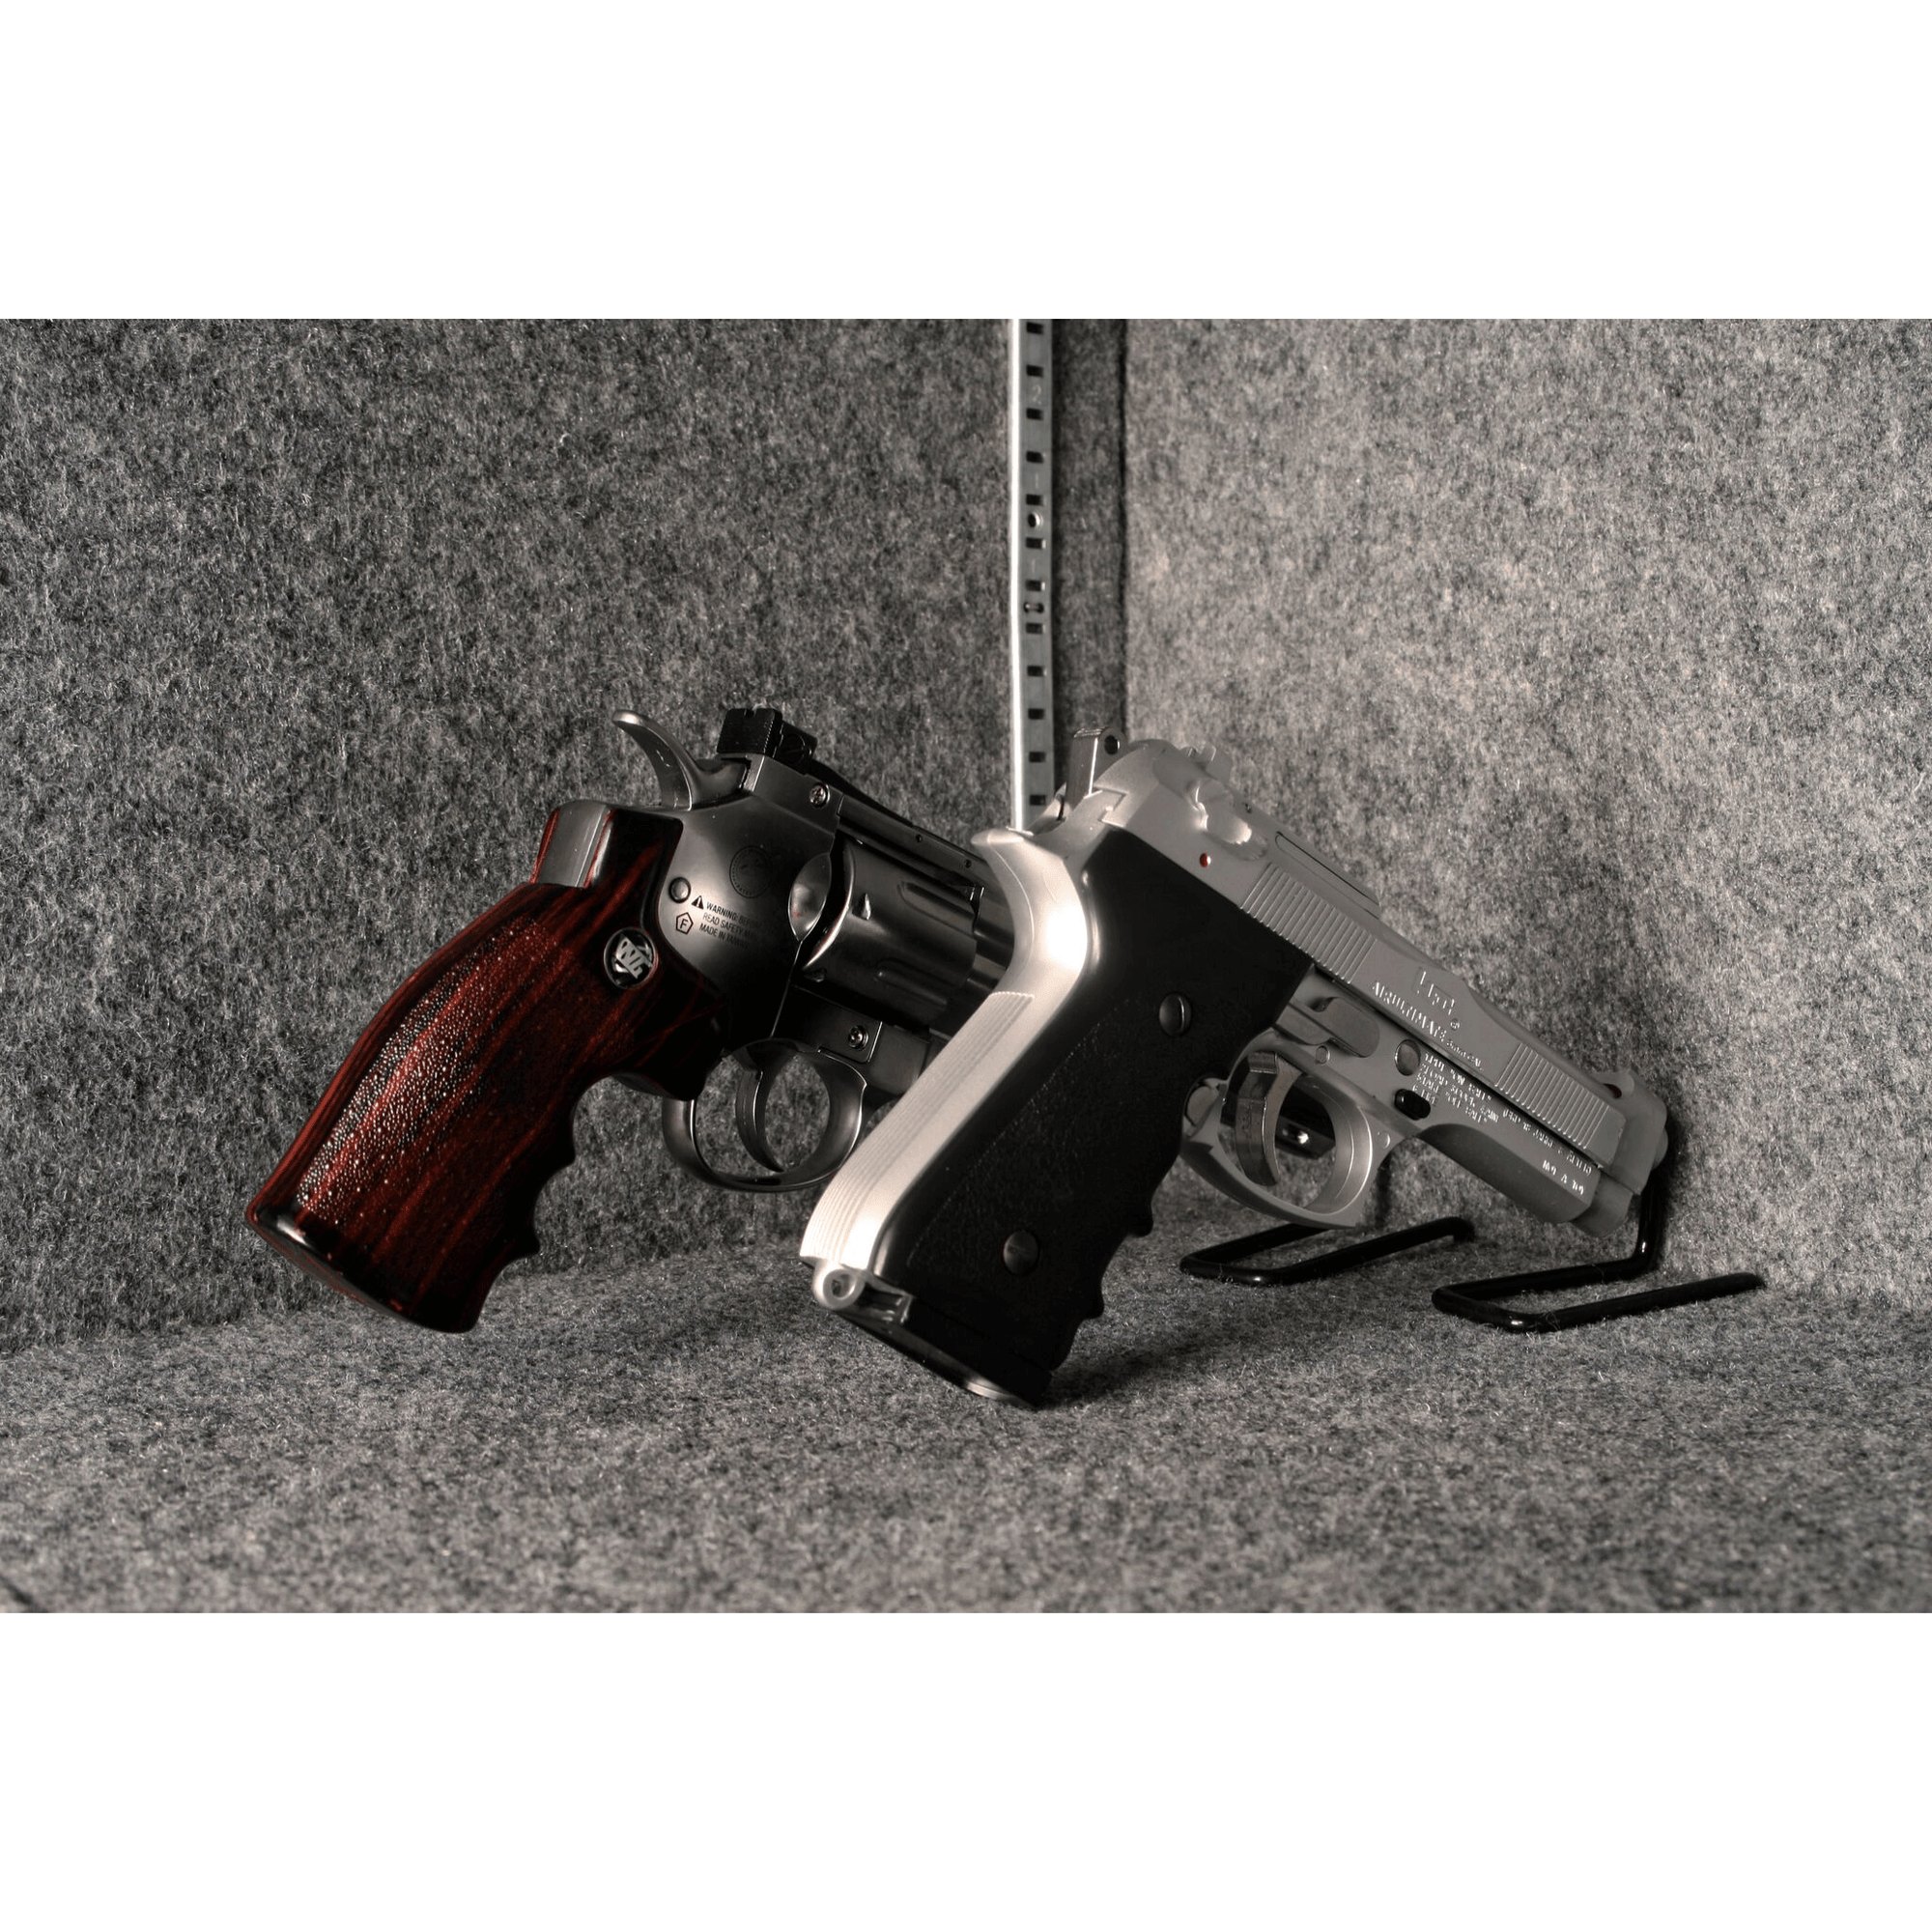 Accessory - Storage - Handgun Hanger - Over-Under - 2 Pack | Liberty Safe Norcal.